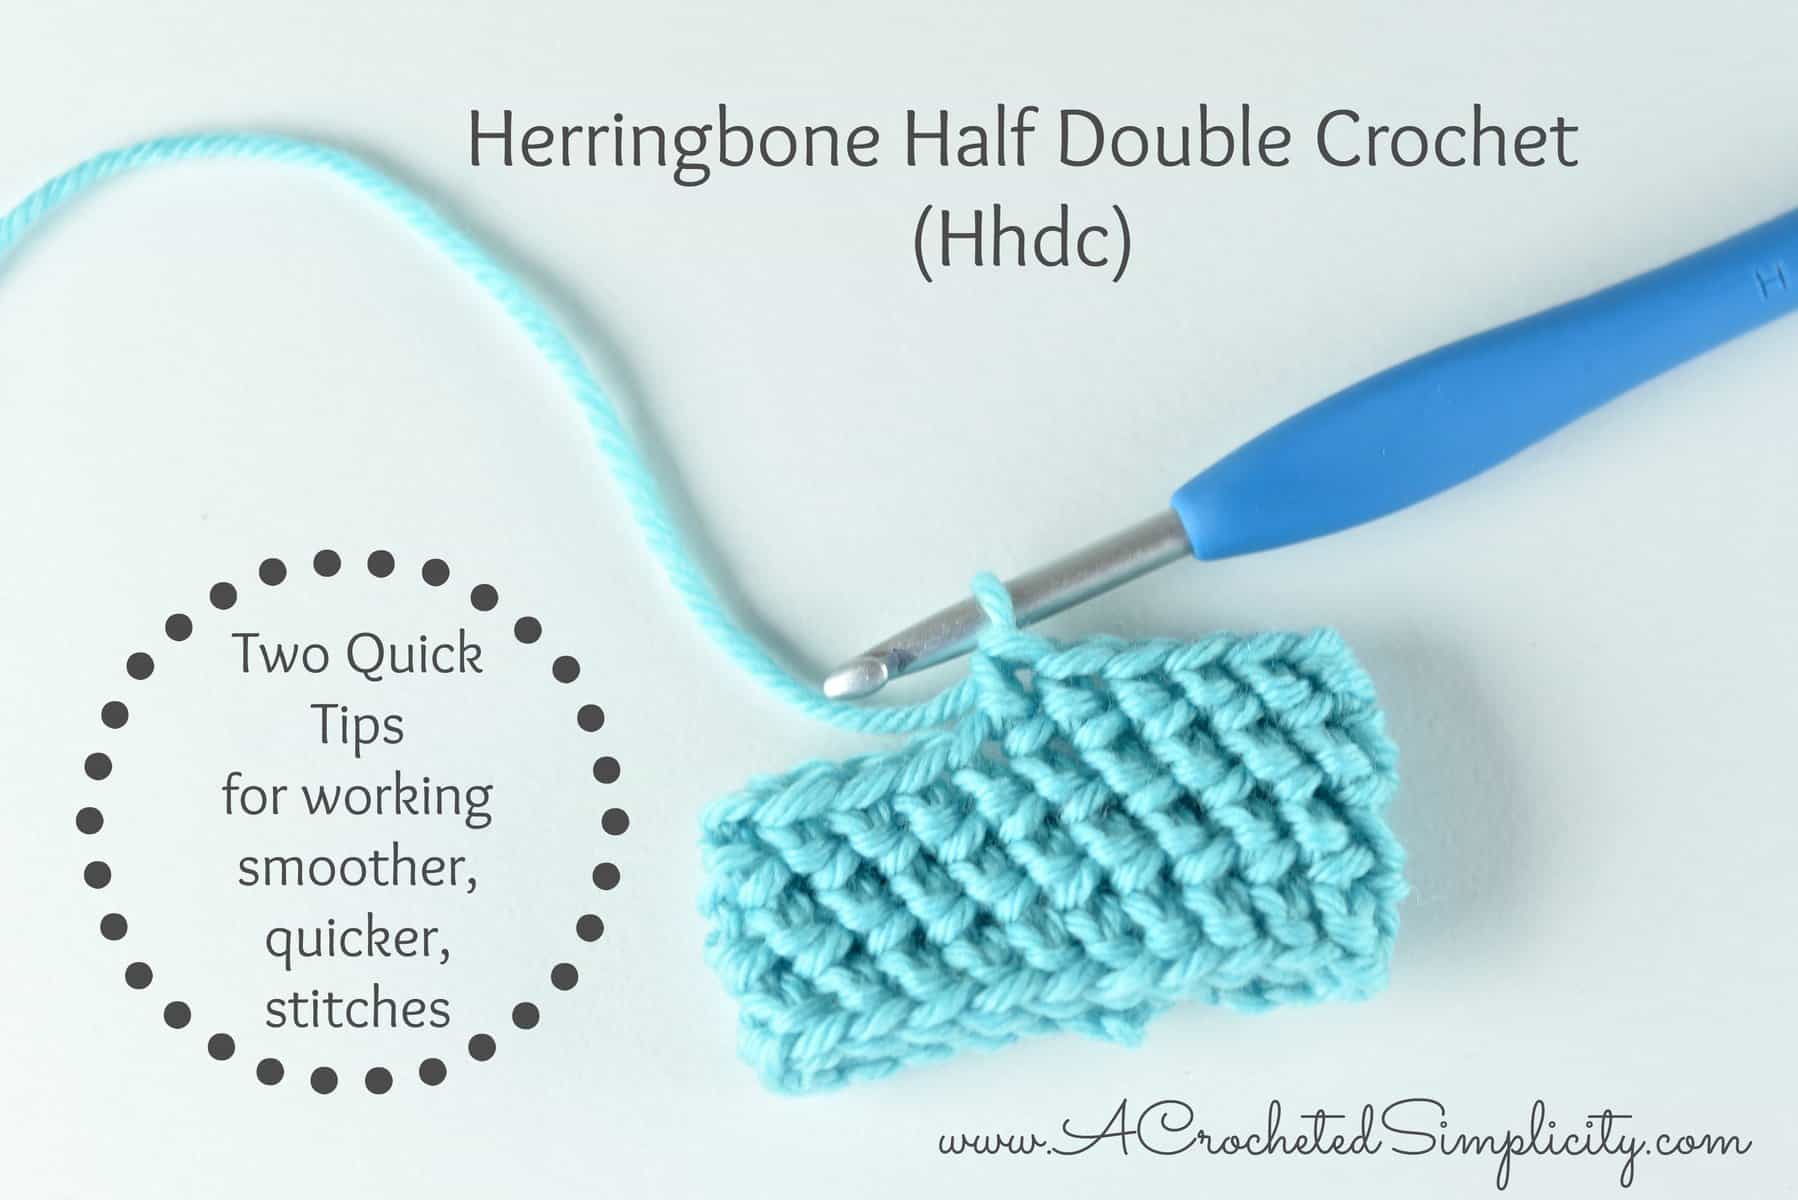 2 Quick Tips for working the Herringbone Half Double Crochet Stitch